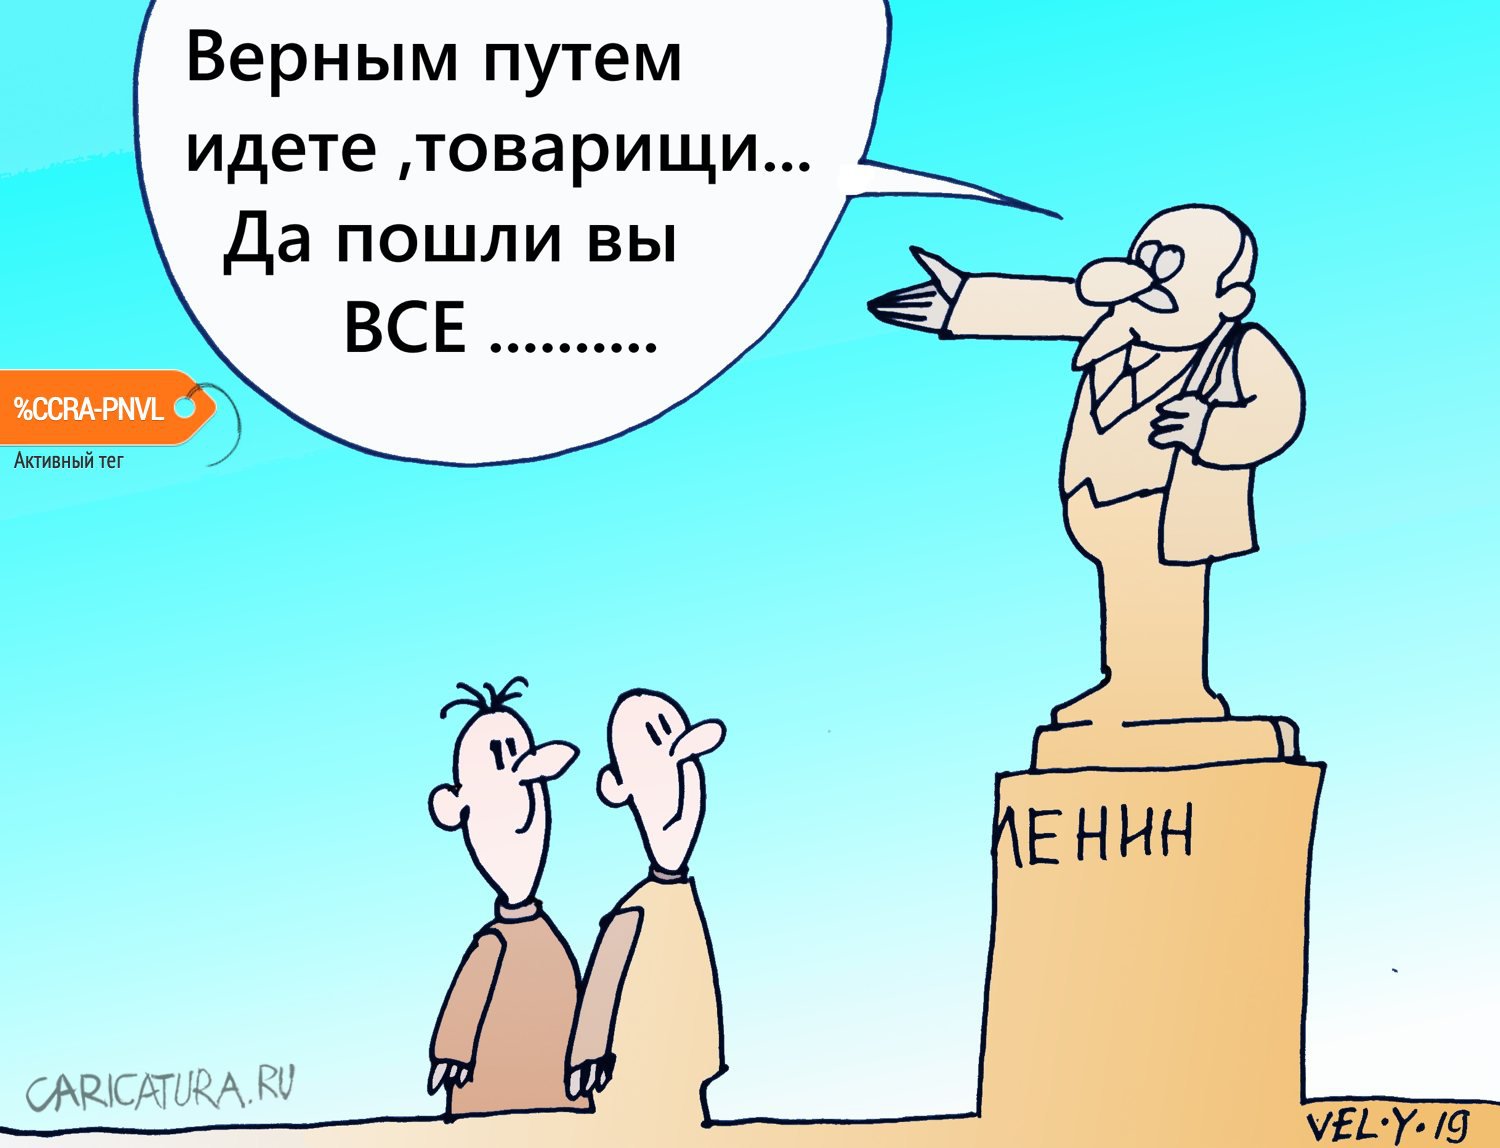 Карикатура "Цель указана...", Юрий Величко